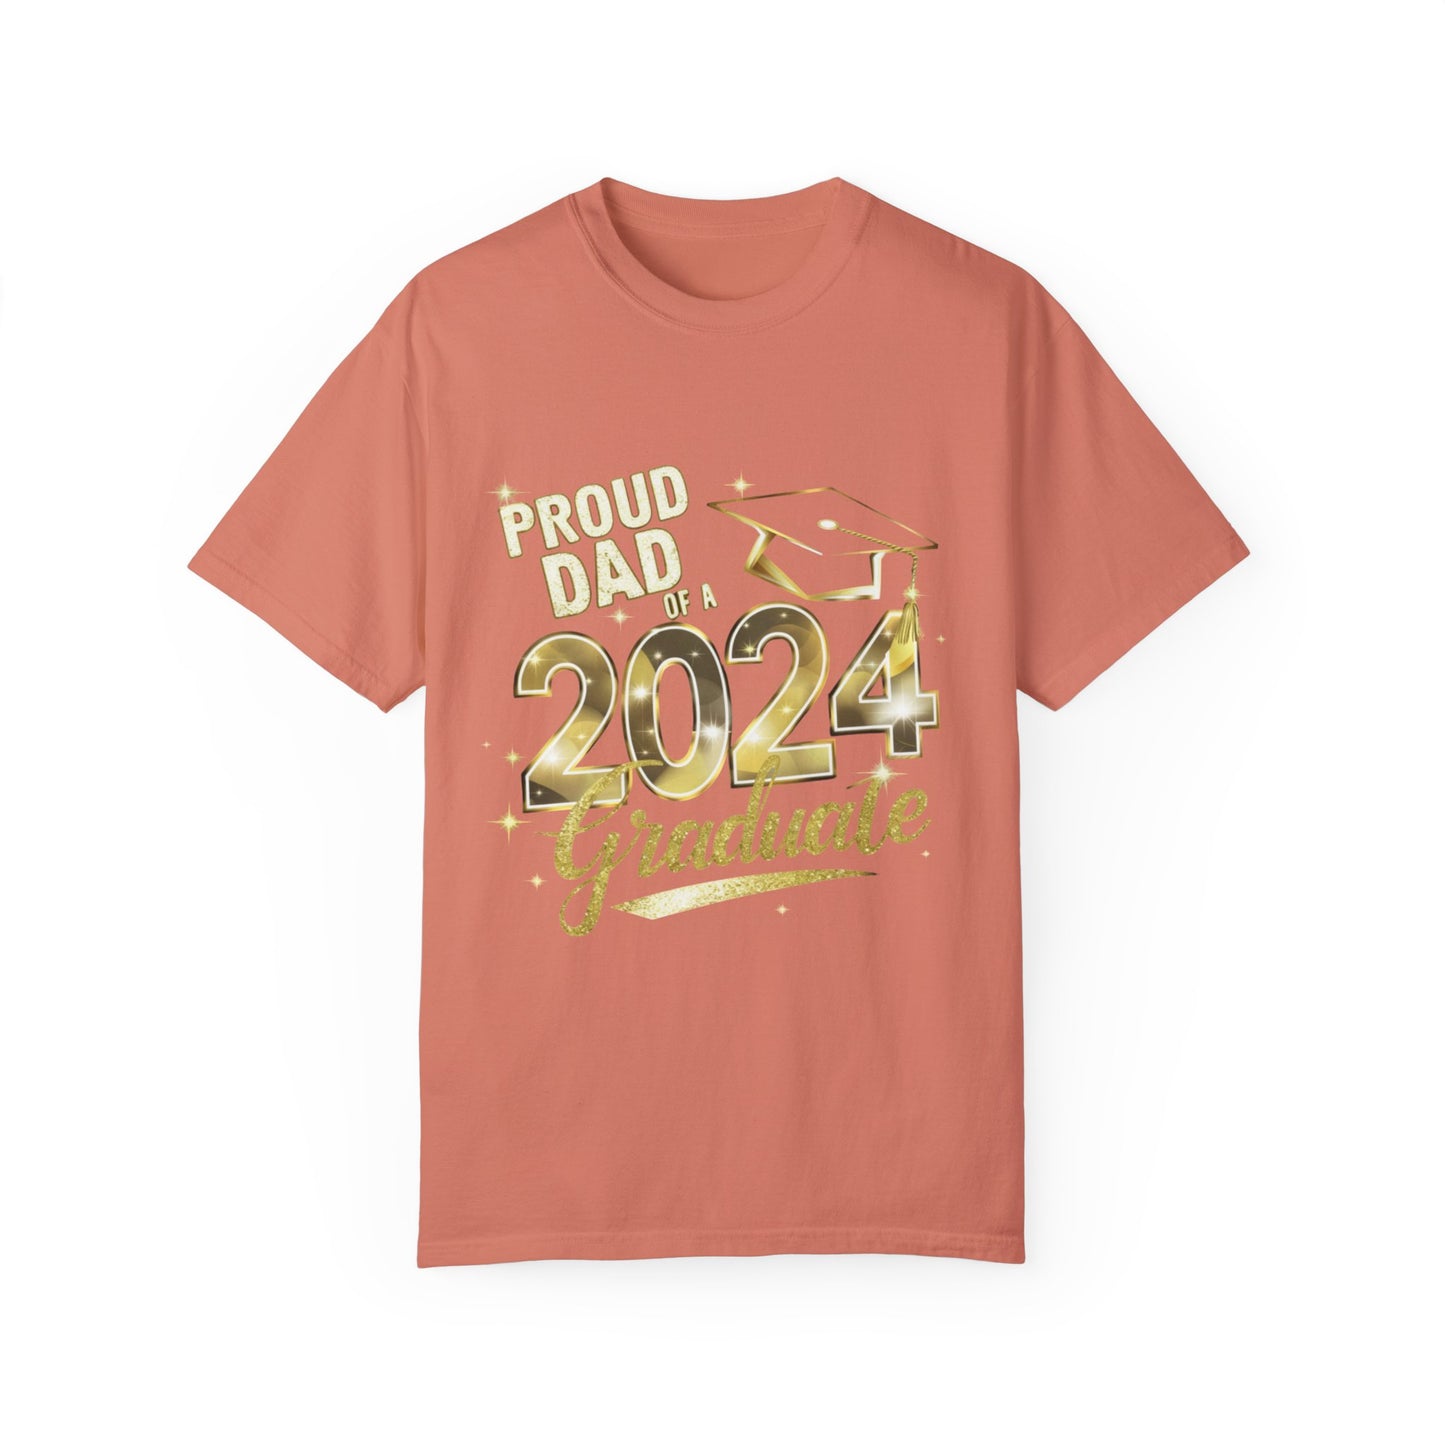 Proud of Dad 2024 Graduate Unisex Garment-dyed T-shirt Cotton Funny Humorous Graphic Soft Premium Unisex Men Women Terracotta T-shirt Birthday Gift-14